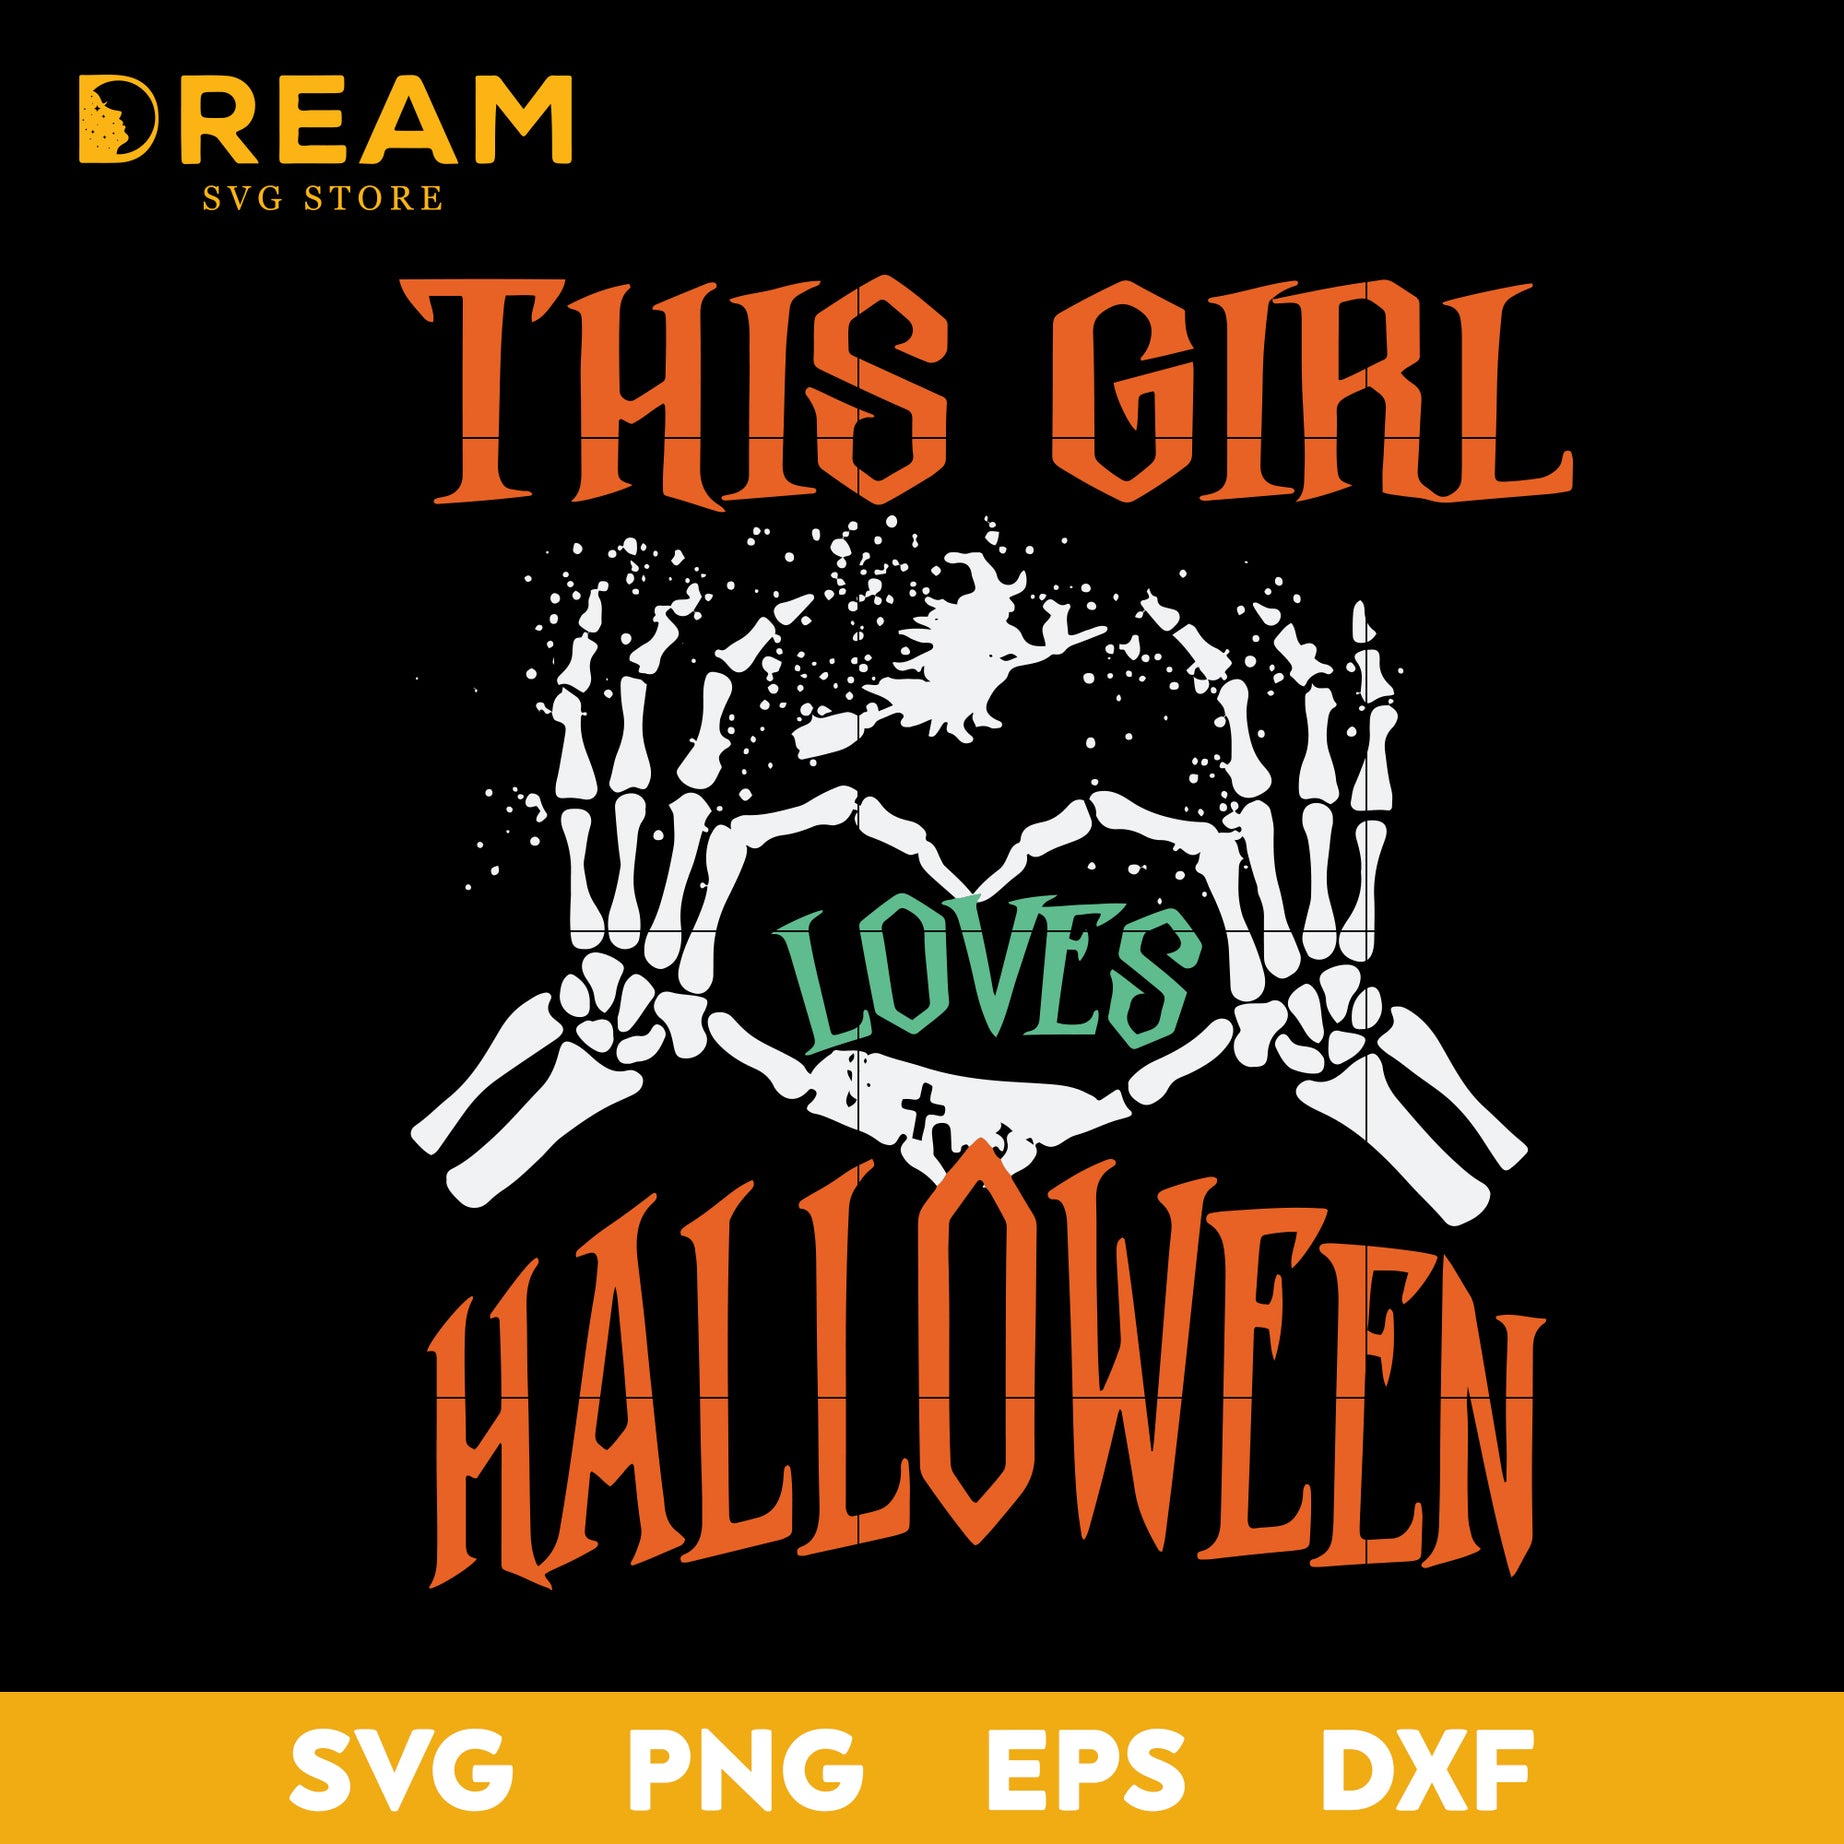 This girl loves halloween svg, Halloween svg, png, dxf, eps digital file HLW1409204L